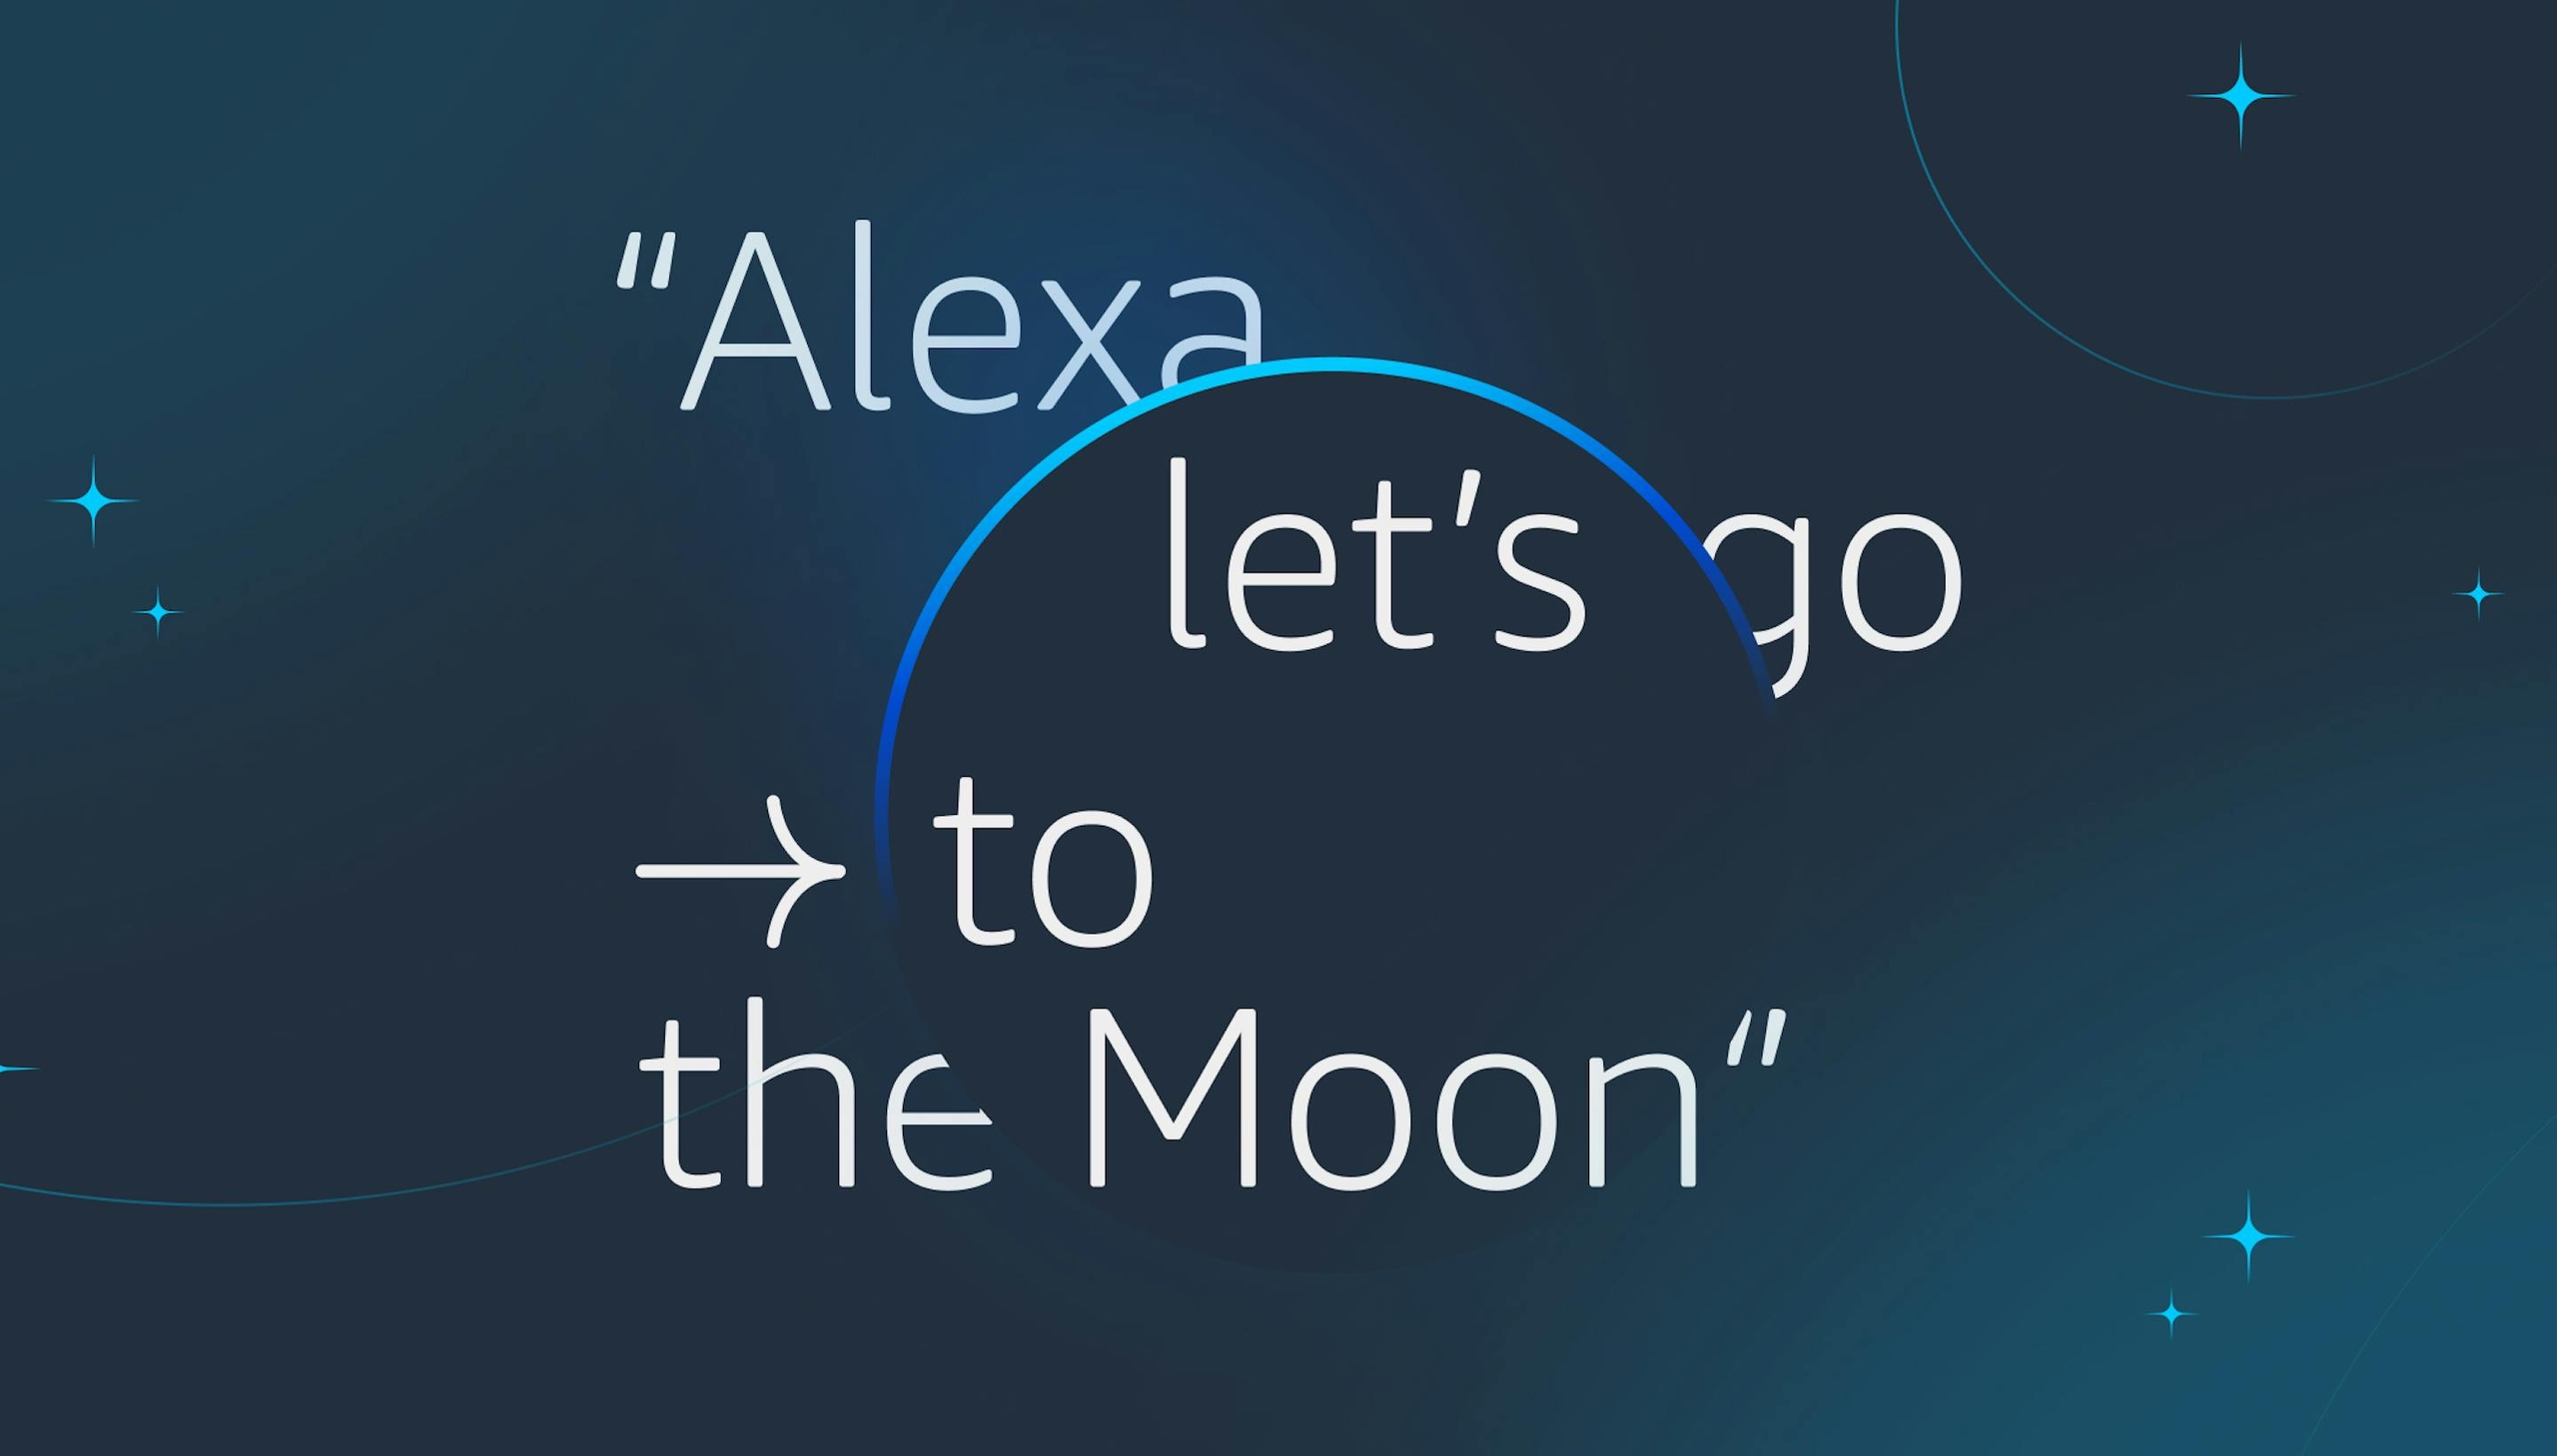 Alexa, let's go to the Moon